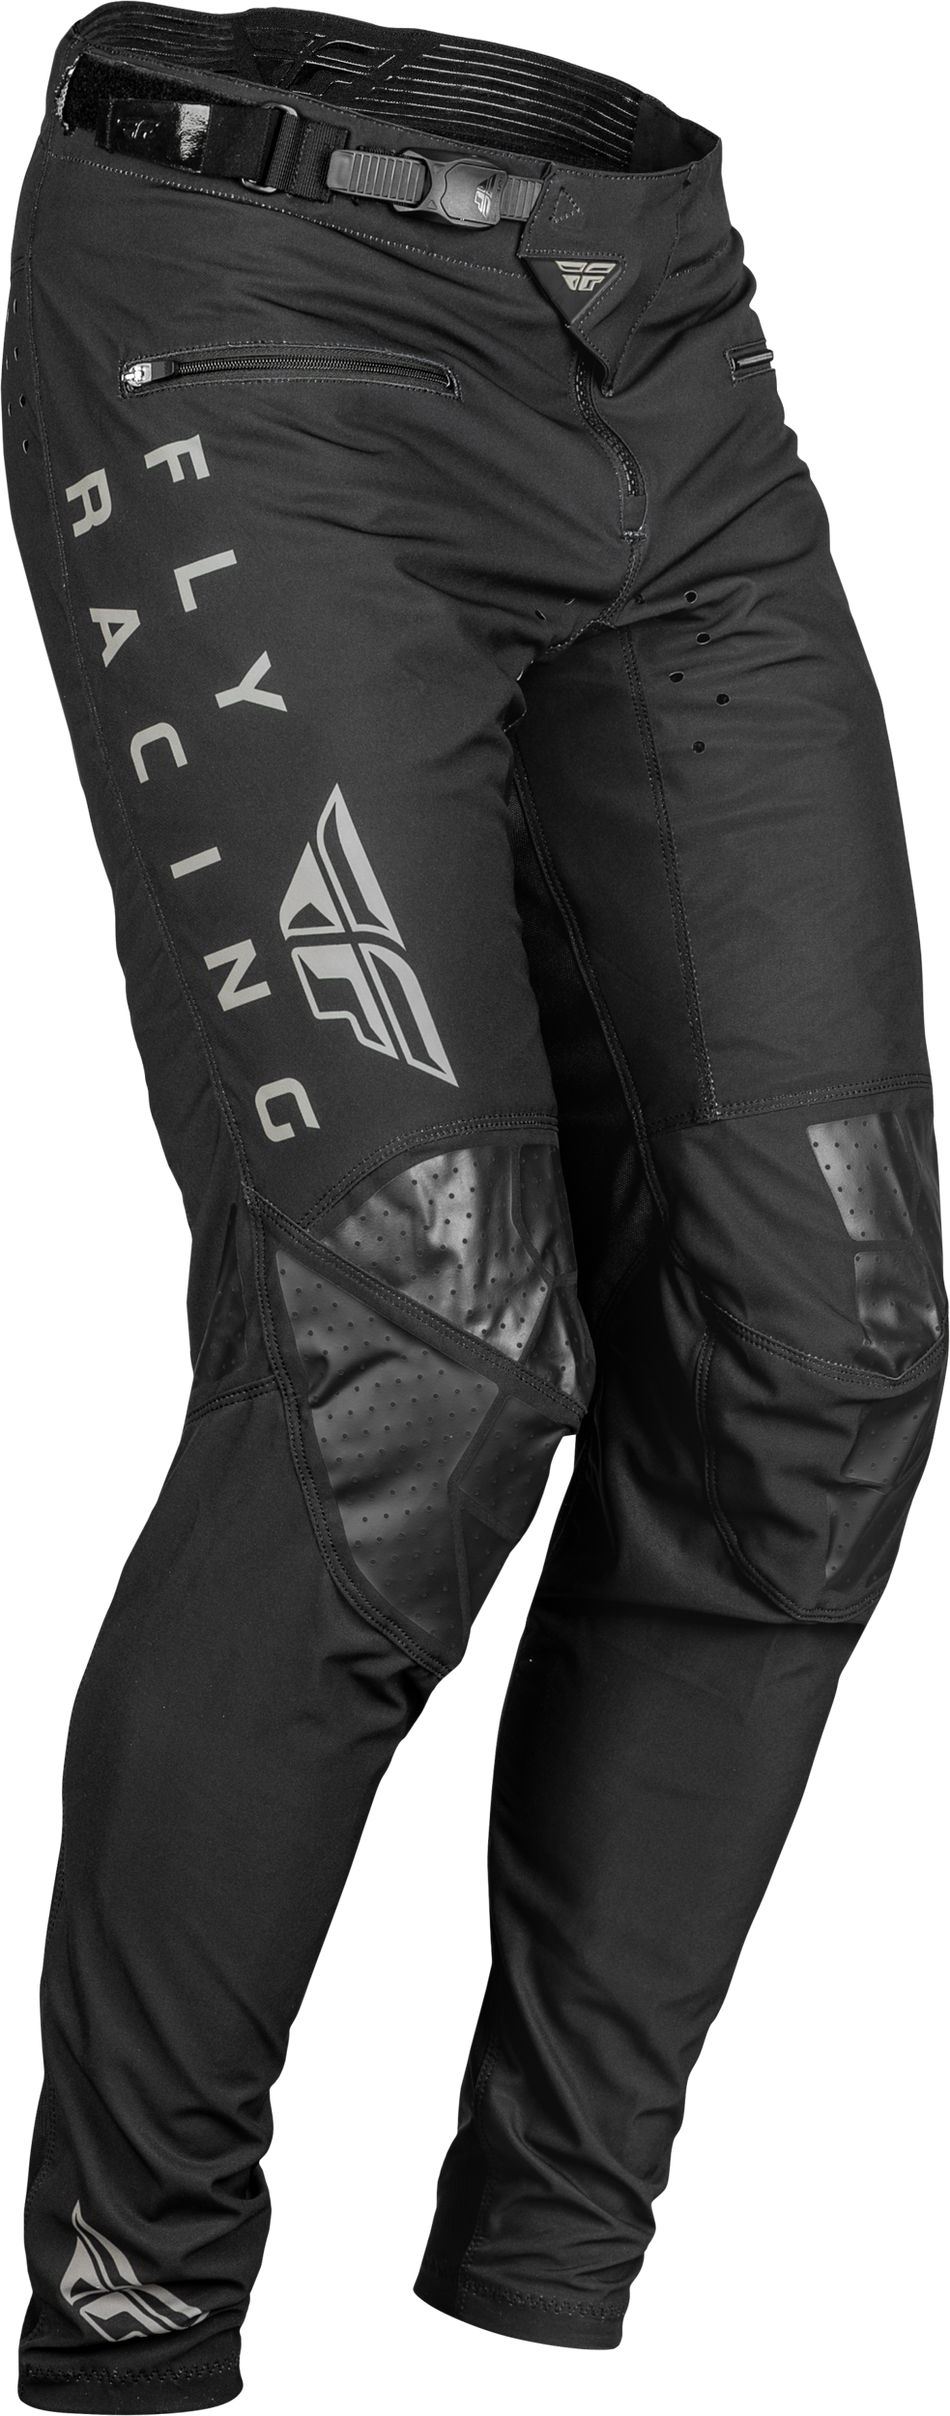 FLY RACING Radium Bicycle Pants Black/Grey Sz 32 376-04032